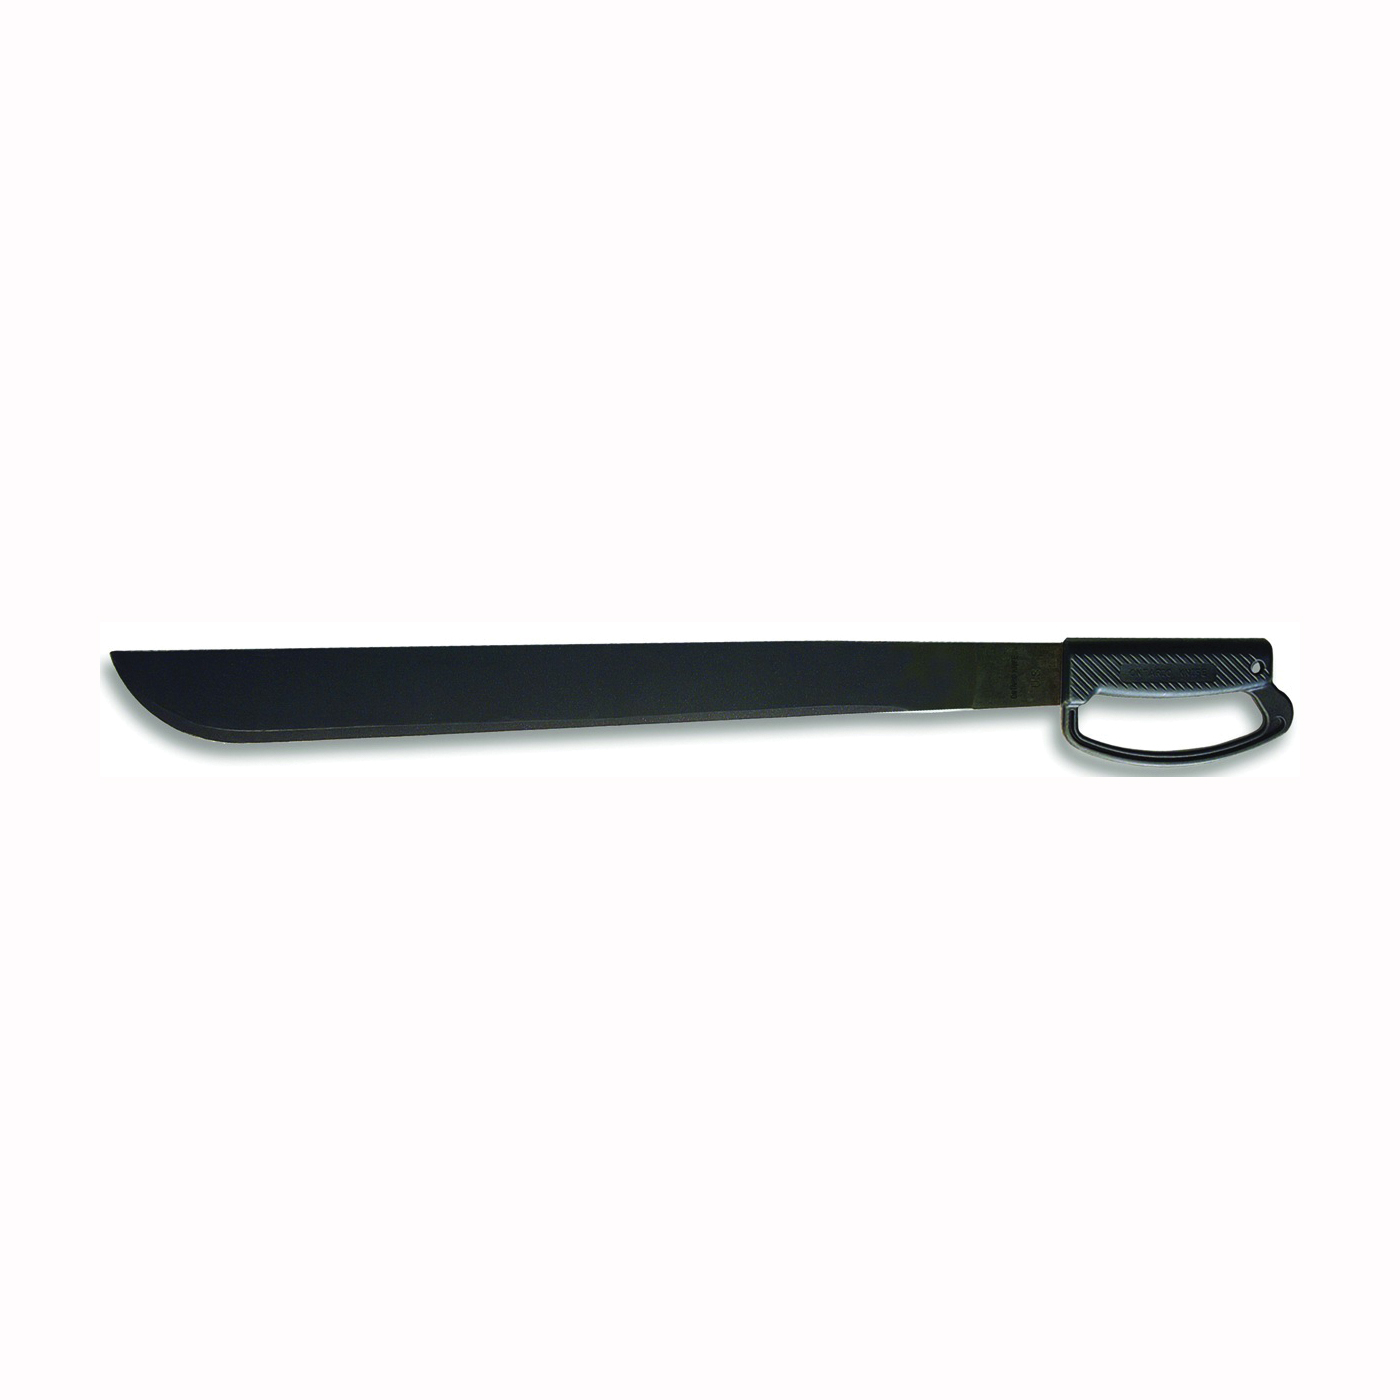 8519 Machete, 27-1/4 in OAL, 22 in Blade, Carbon Steel Blade, Polymer Handle